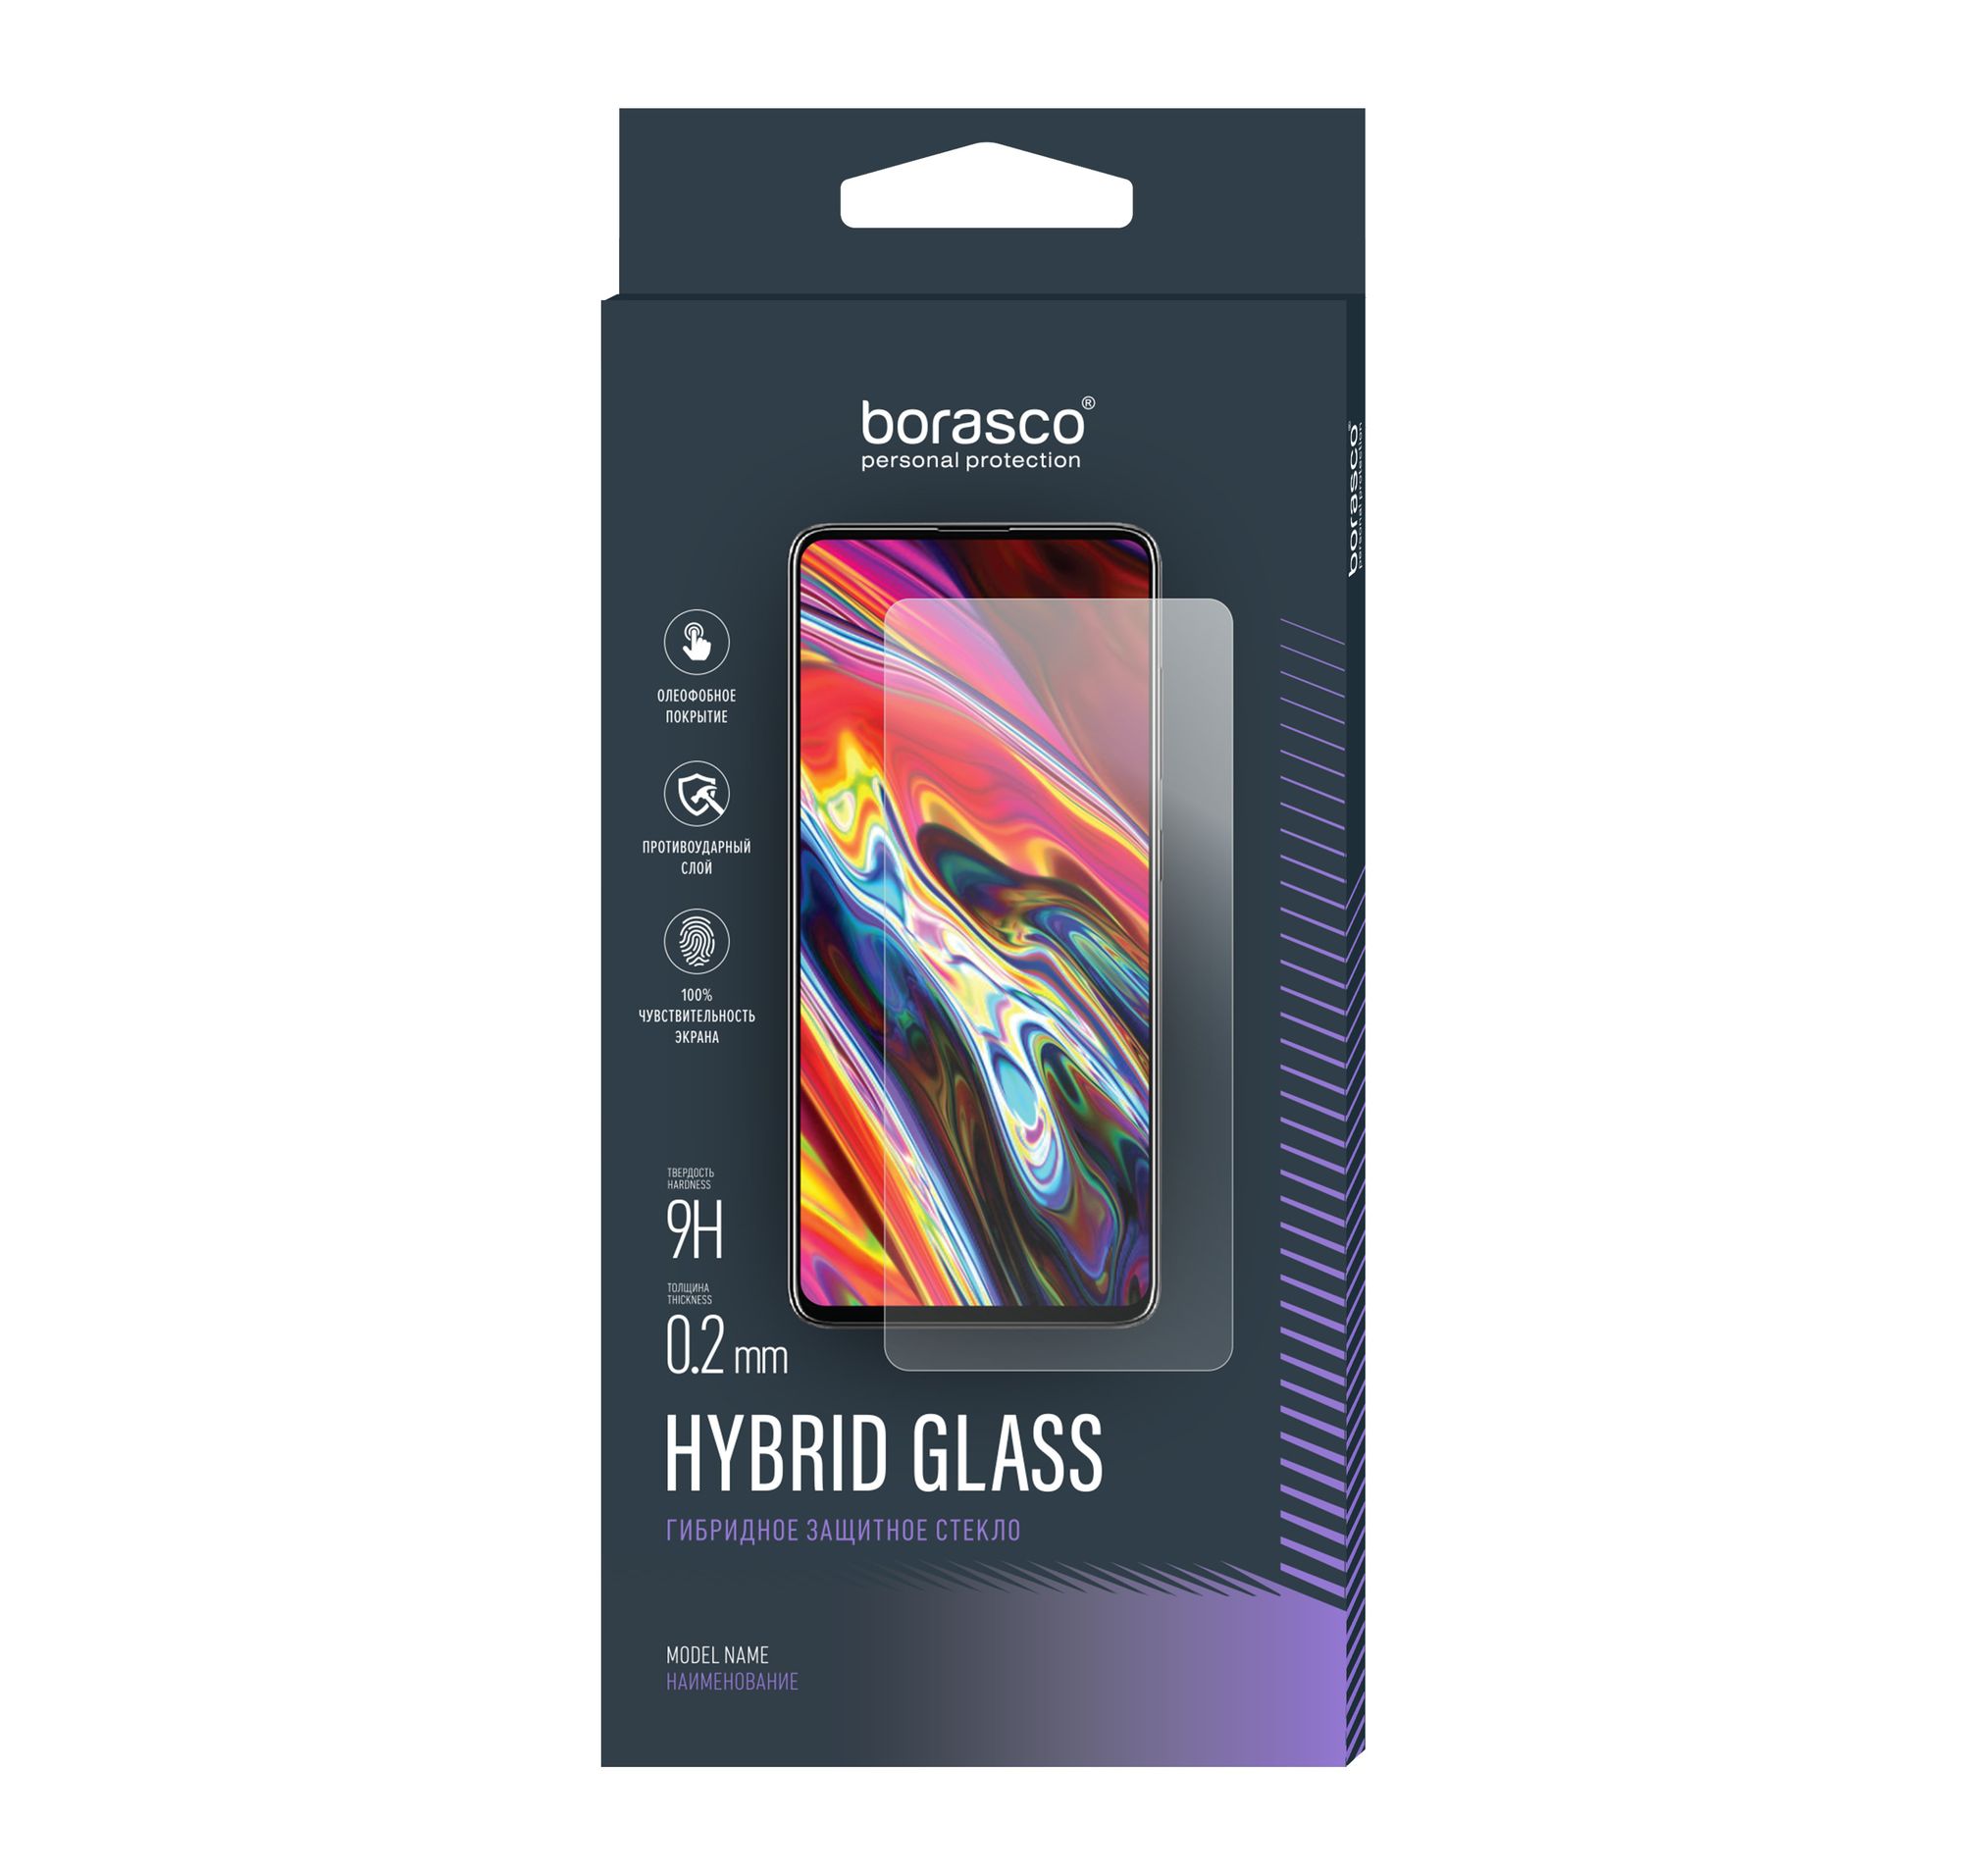 Стекло защитное Hybrid Glass VSP 0,26 мм для iPhone 6 Plus/6S Plus защитное стекло anank tempered glass pro 9h fast 3d iphone 6 plus 6s plus черный